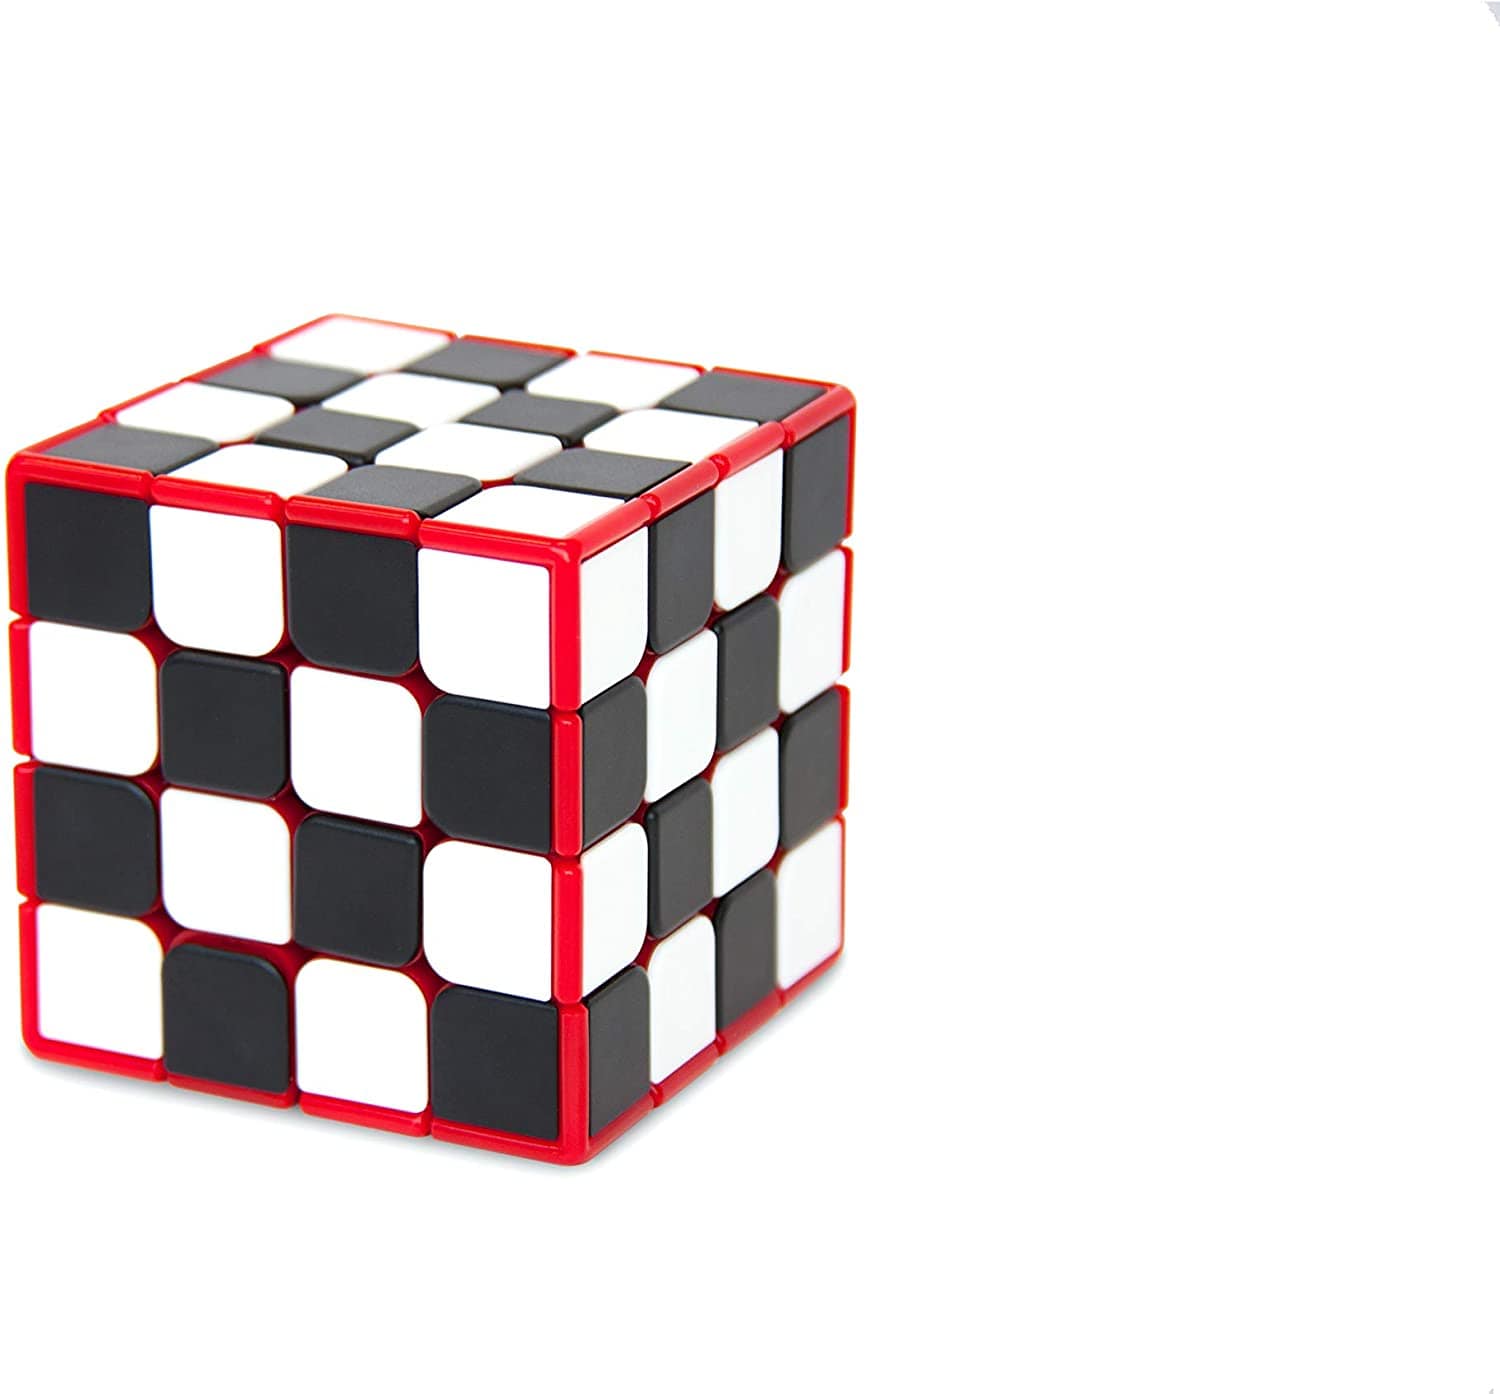 Meffert’s Checker Cube